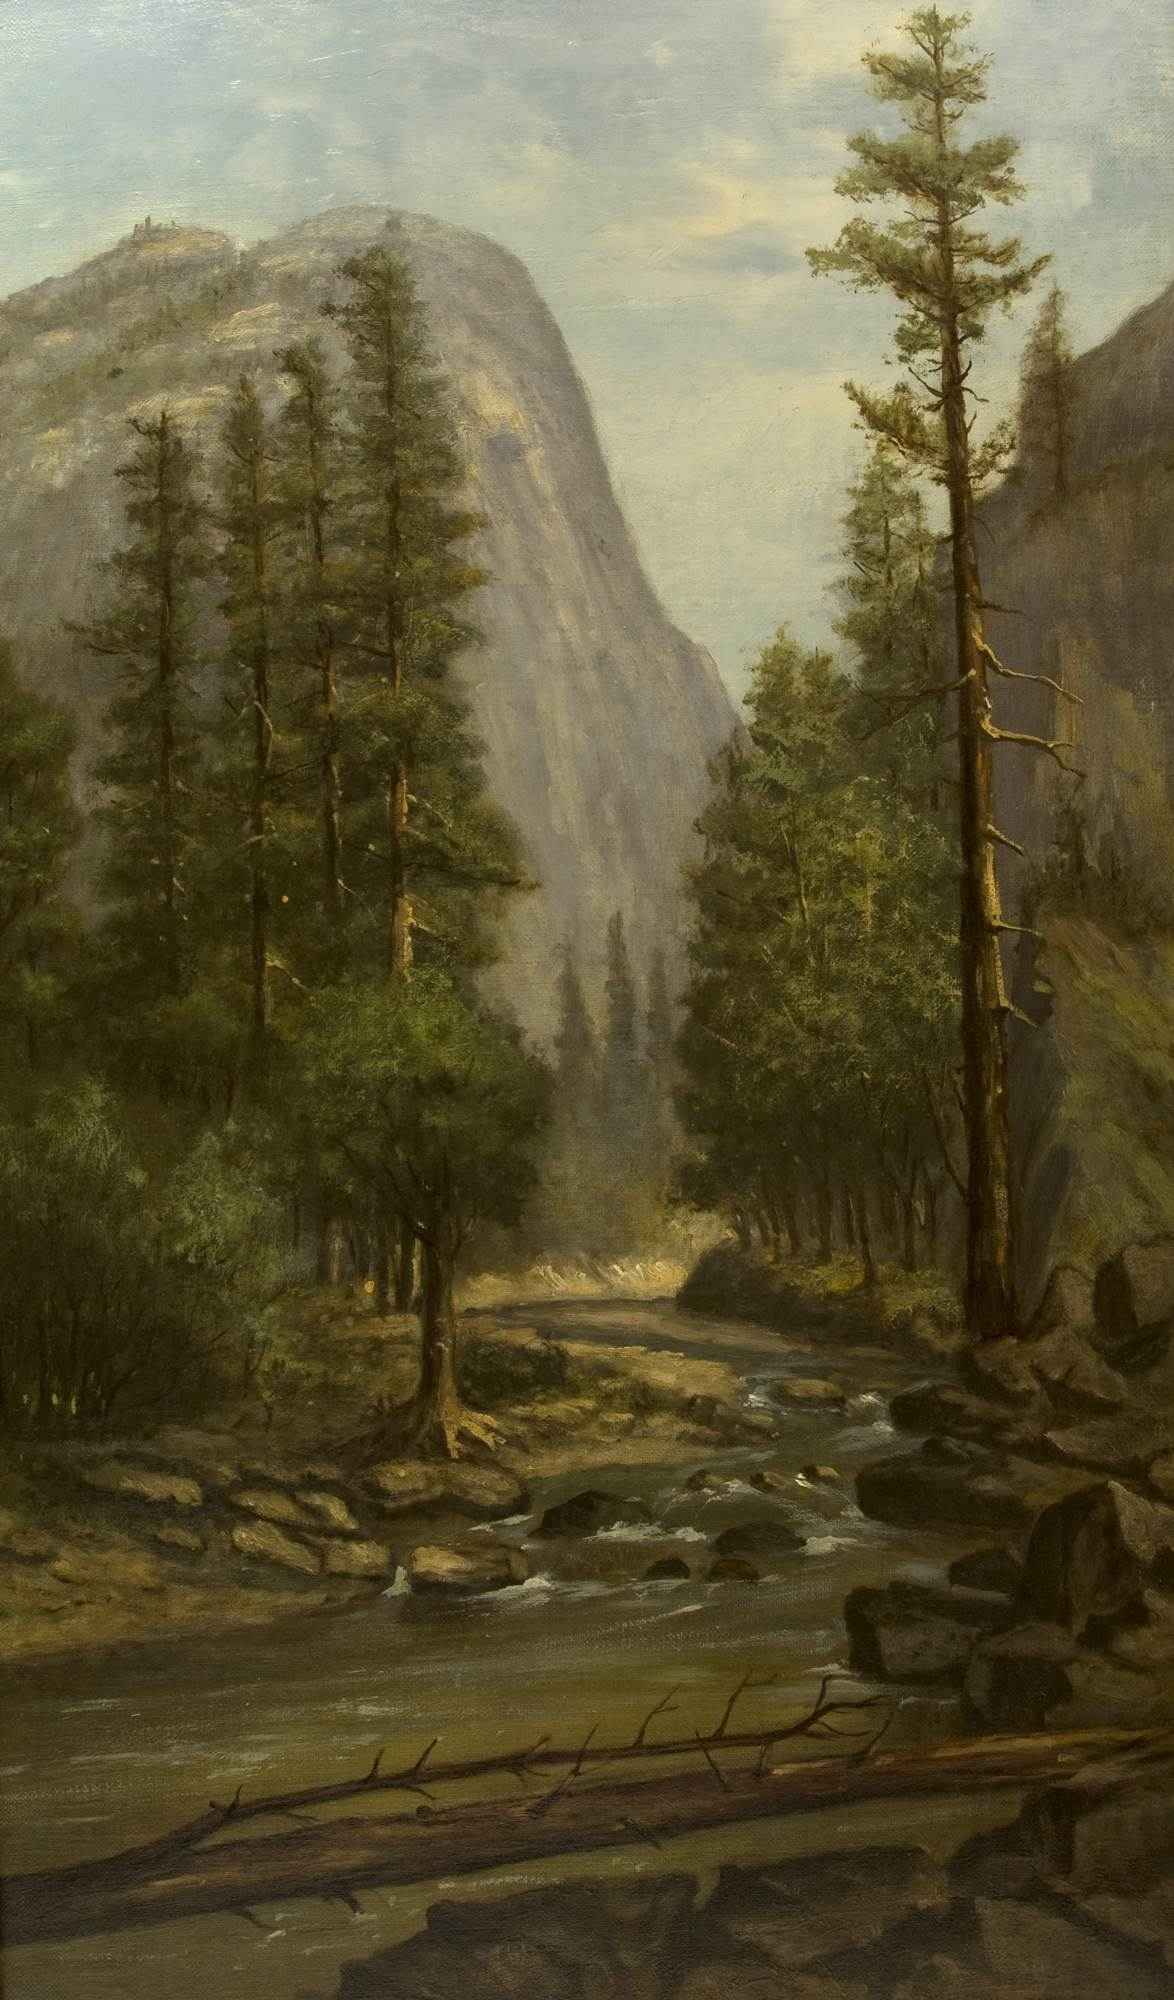 Painting Yosemite Valley Floor